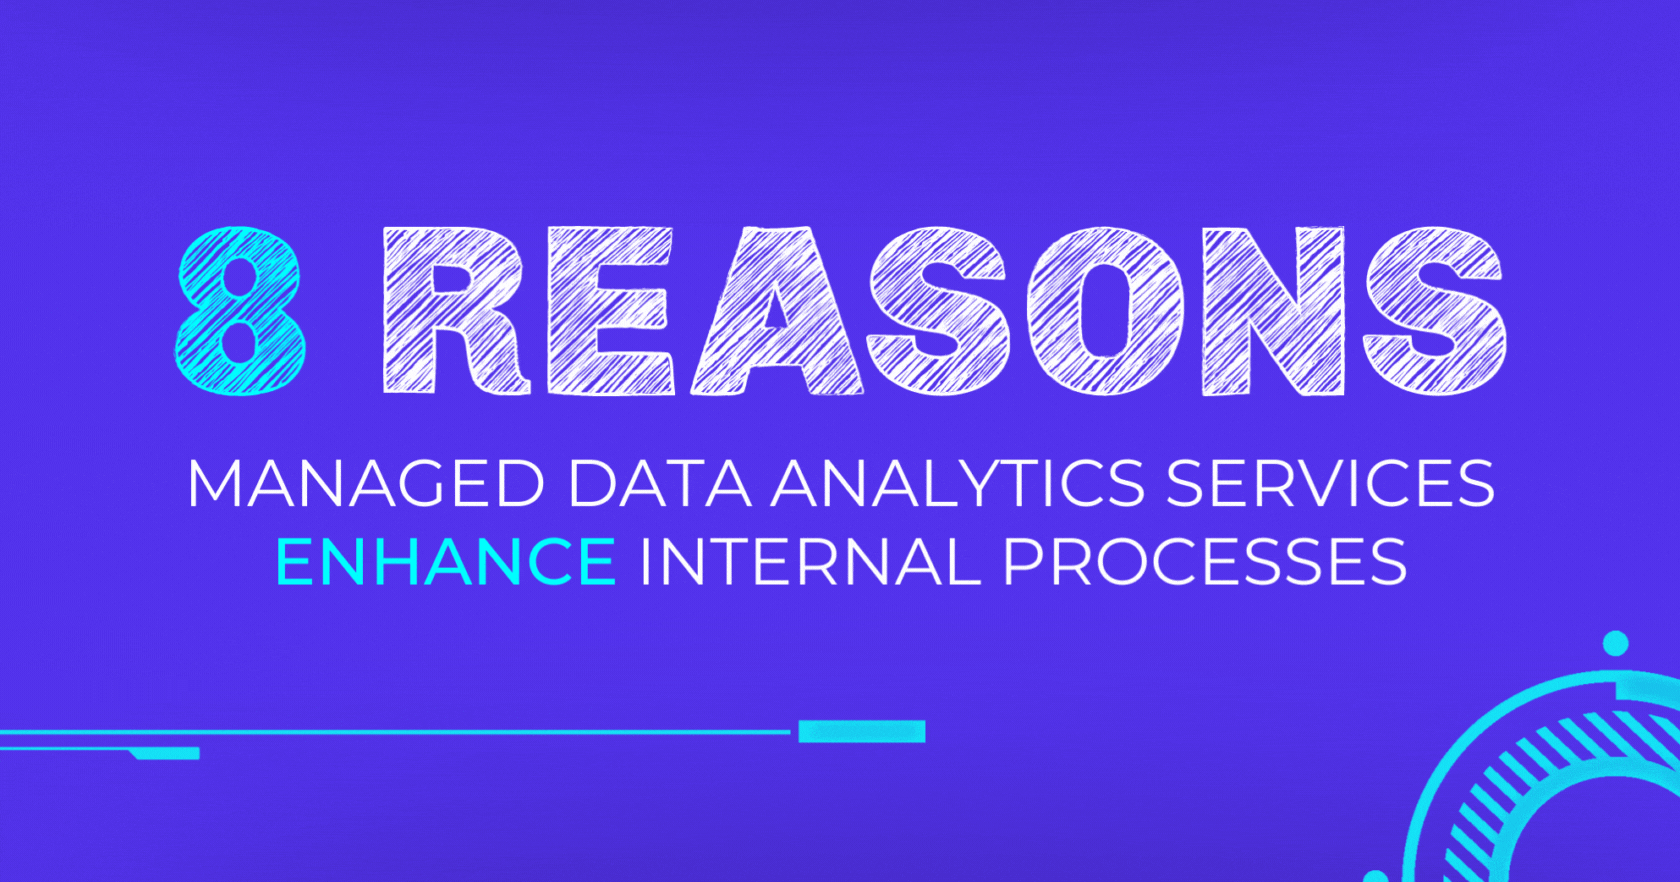 8 Reasons Managed Data Analytics Services Enhance